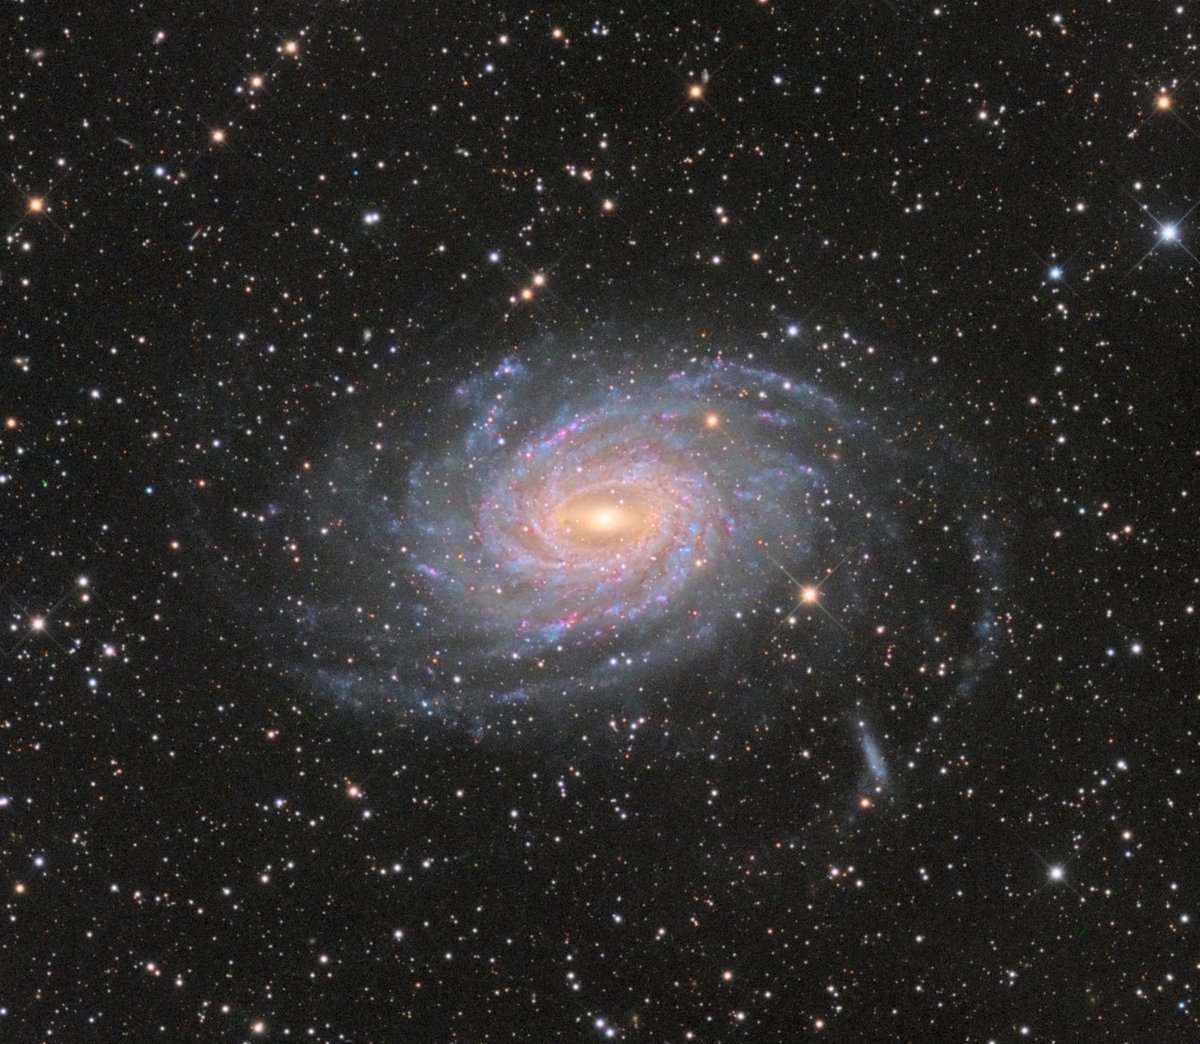 Space photo moment - Spiral Galaxy NGC 6744 by Zhuokai Liu, Jiang Yuhang ( https://apod.nasa.gov/apod/ap191205.html)